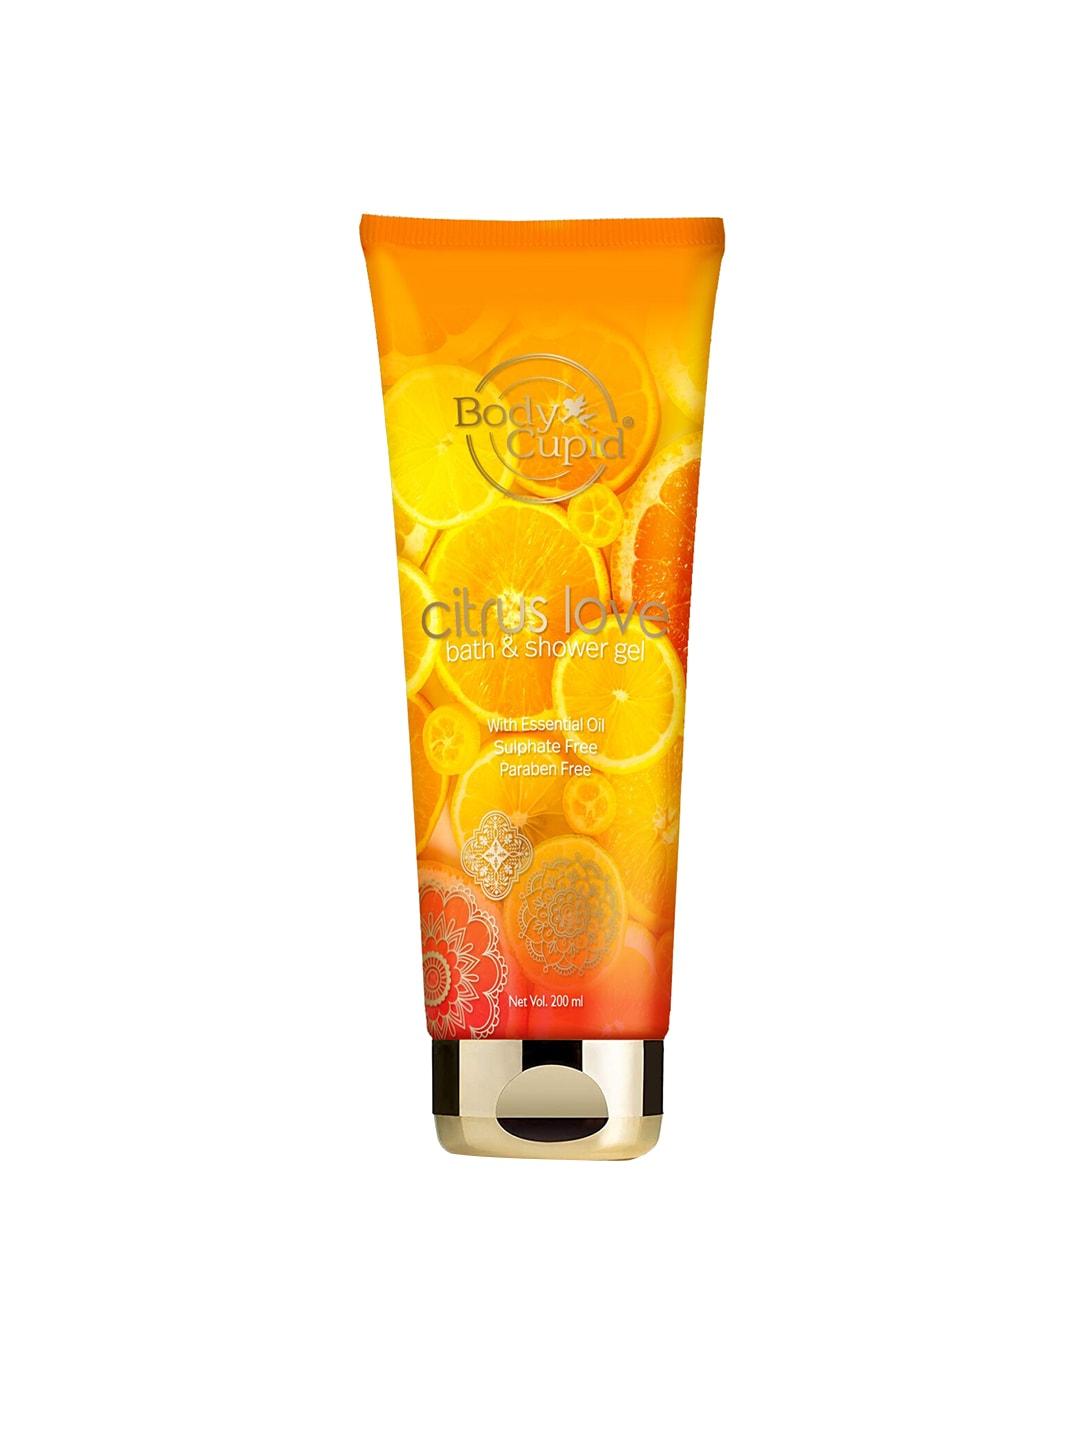 Body Cupid Citrus Love Bath & Shower Gel with Essential Oils - 200 ml